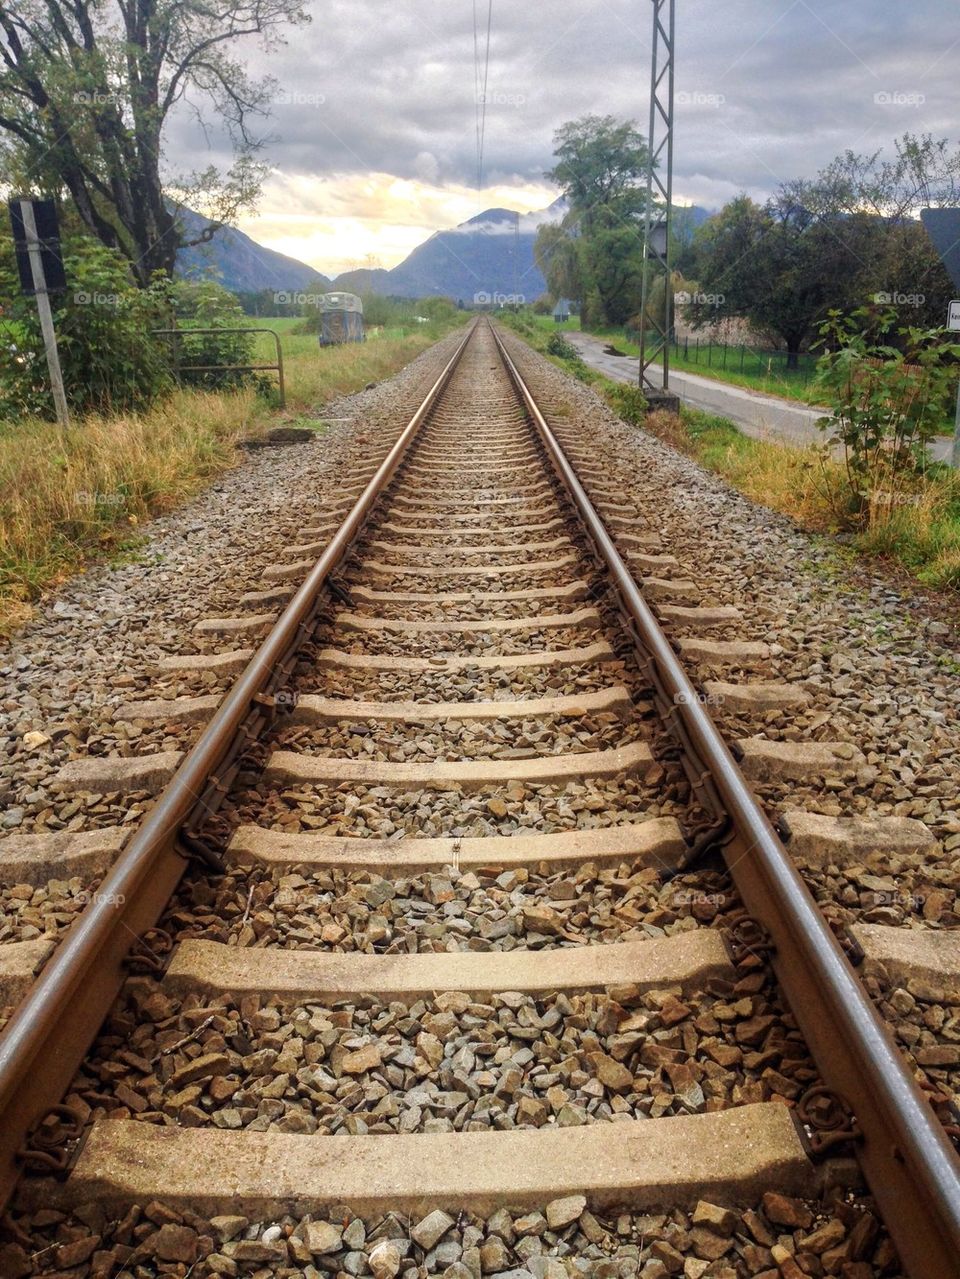 Railroad track passing through field